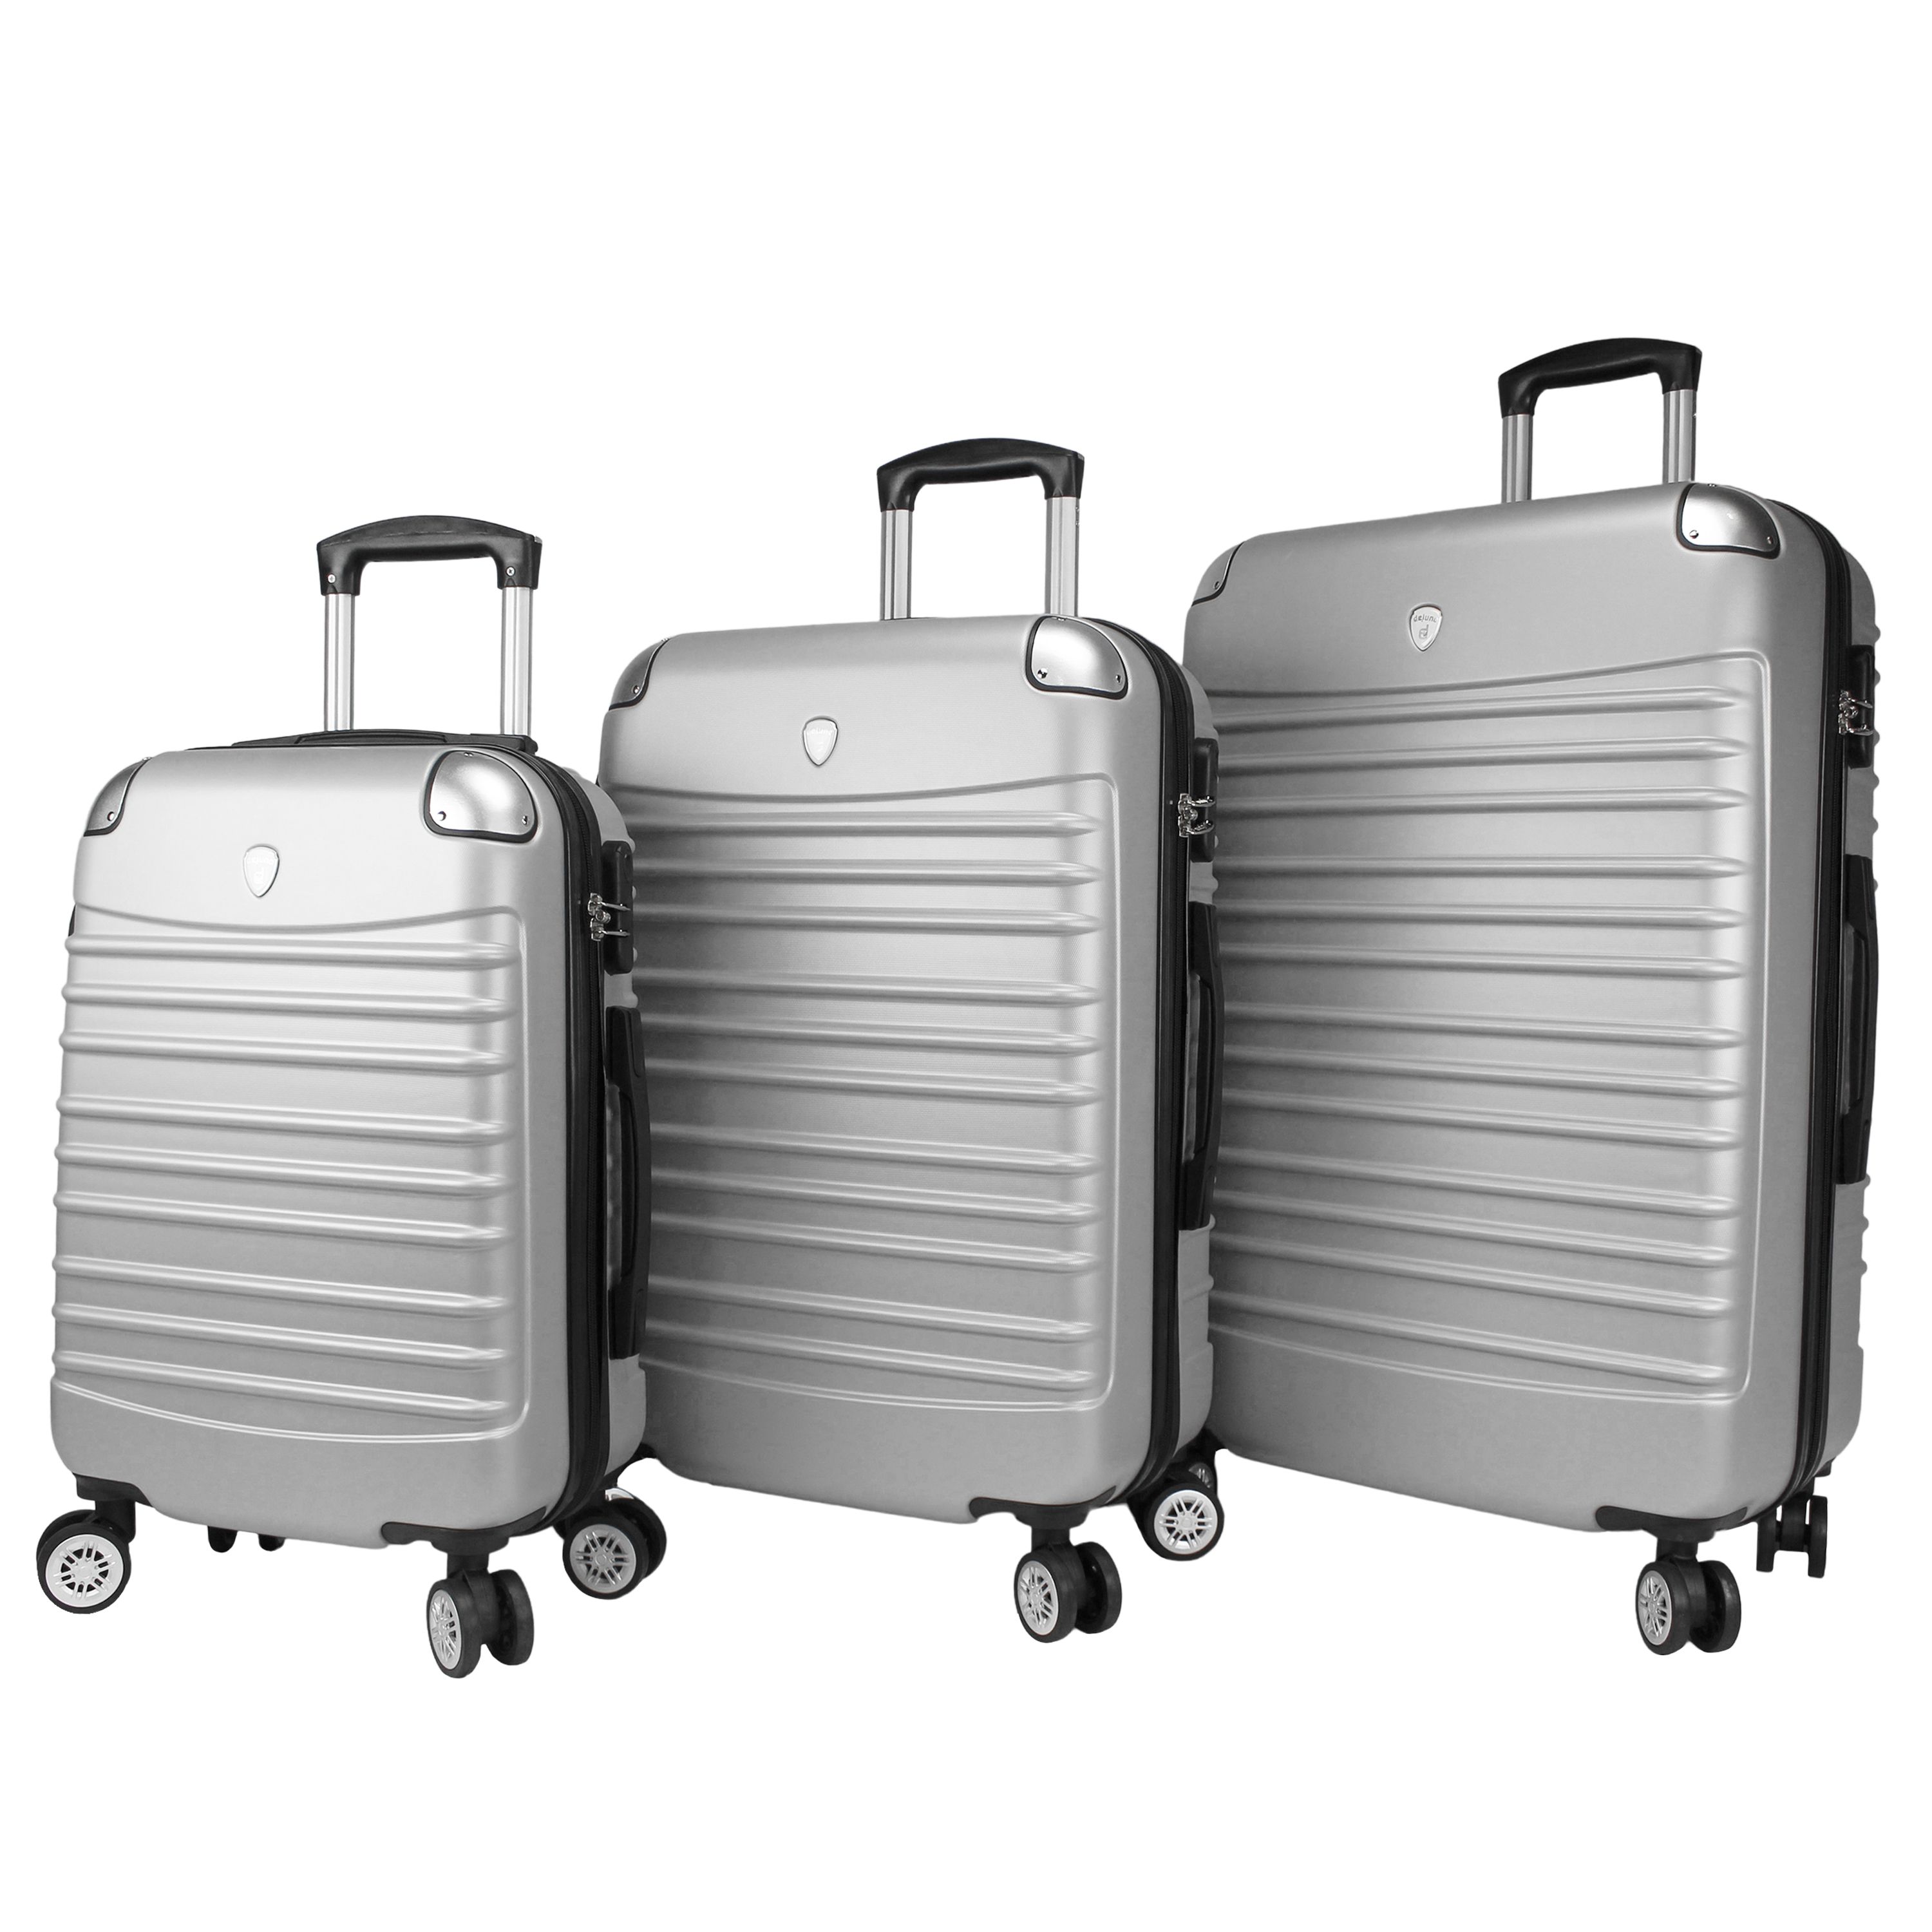 25dj-610-silver-grey Impact Hardside Spinner Luggage Set - Silver, 3 Piece